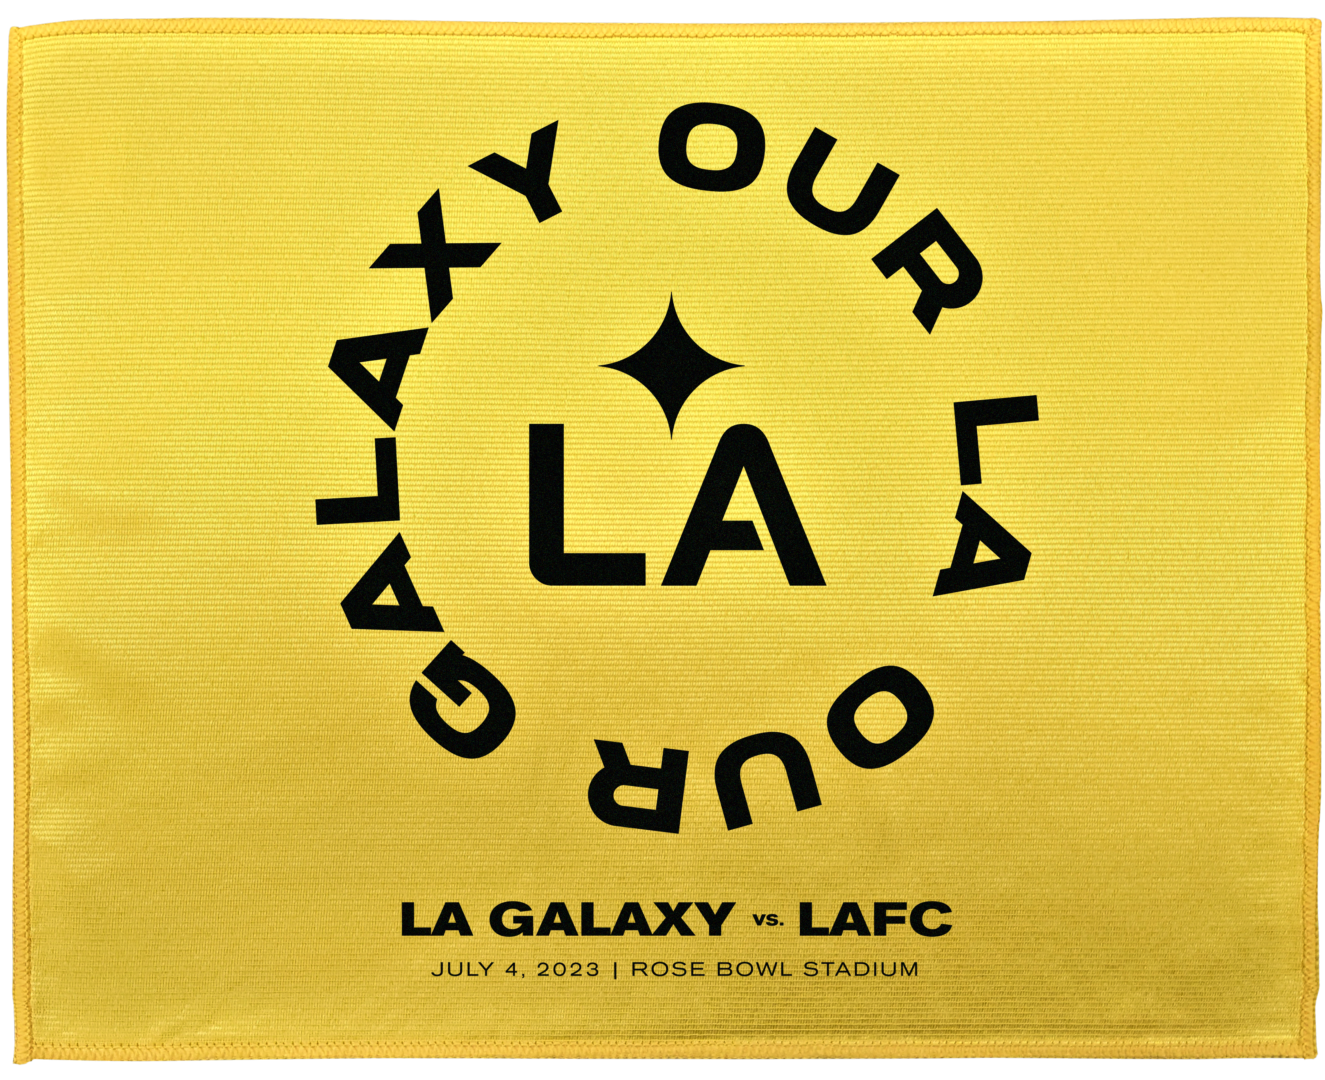 LA Galaxy text on yellow color cloth